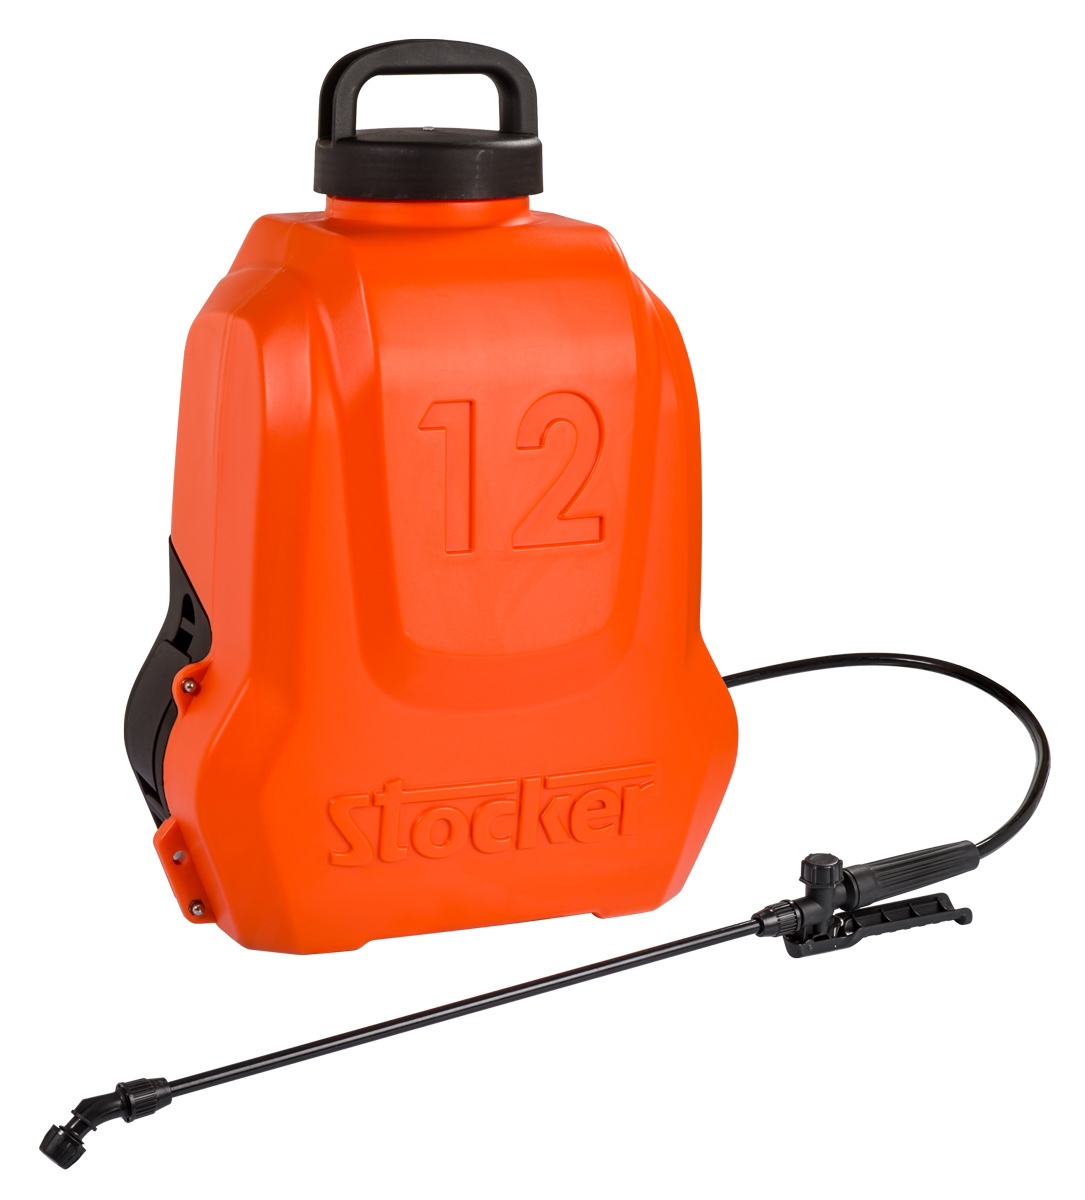 ST239  Bomba de mochila eléctrica 12 L Li-Ion 2,5 bar